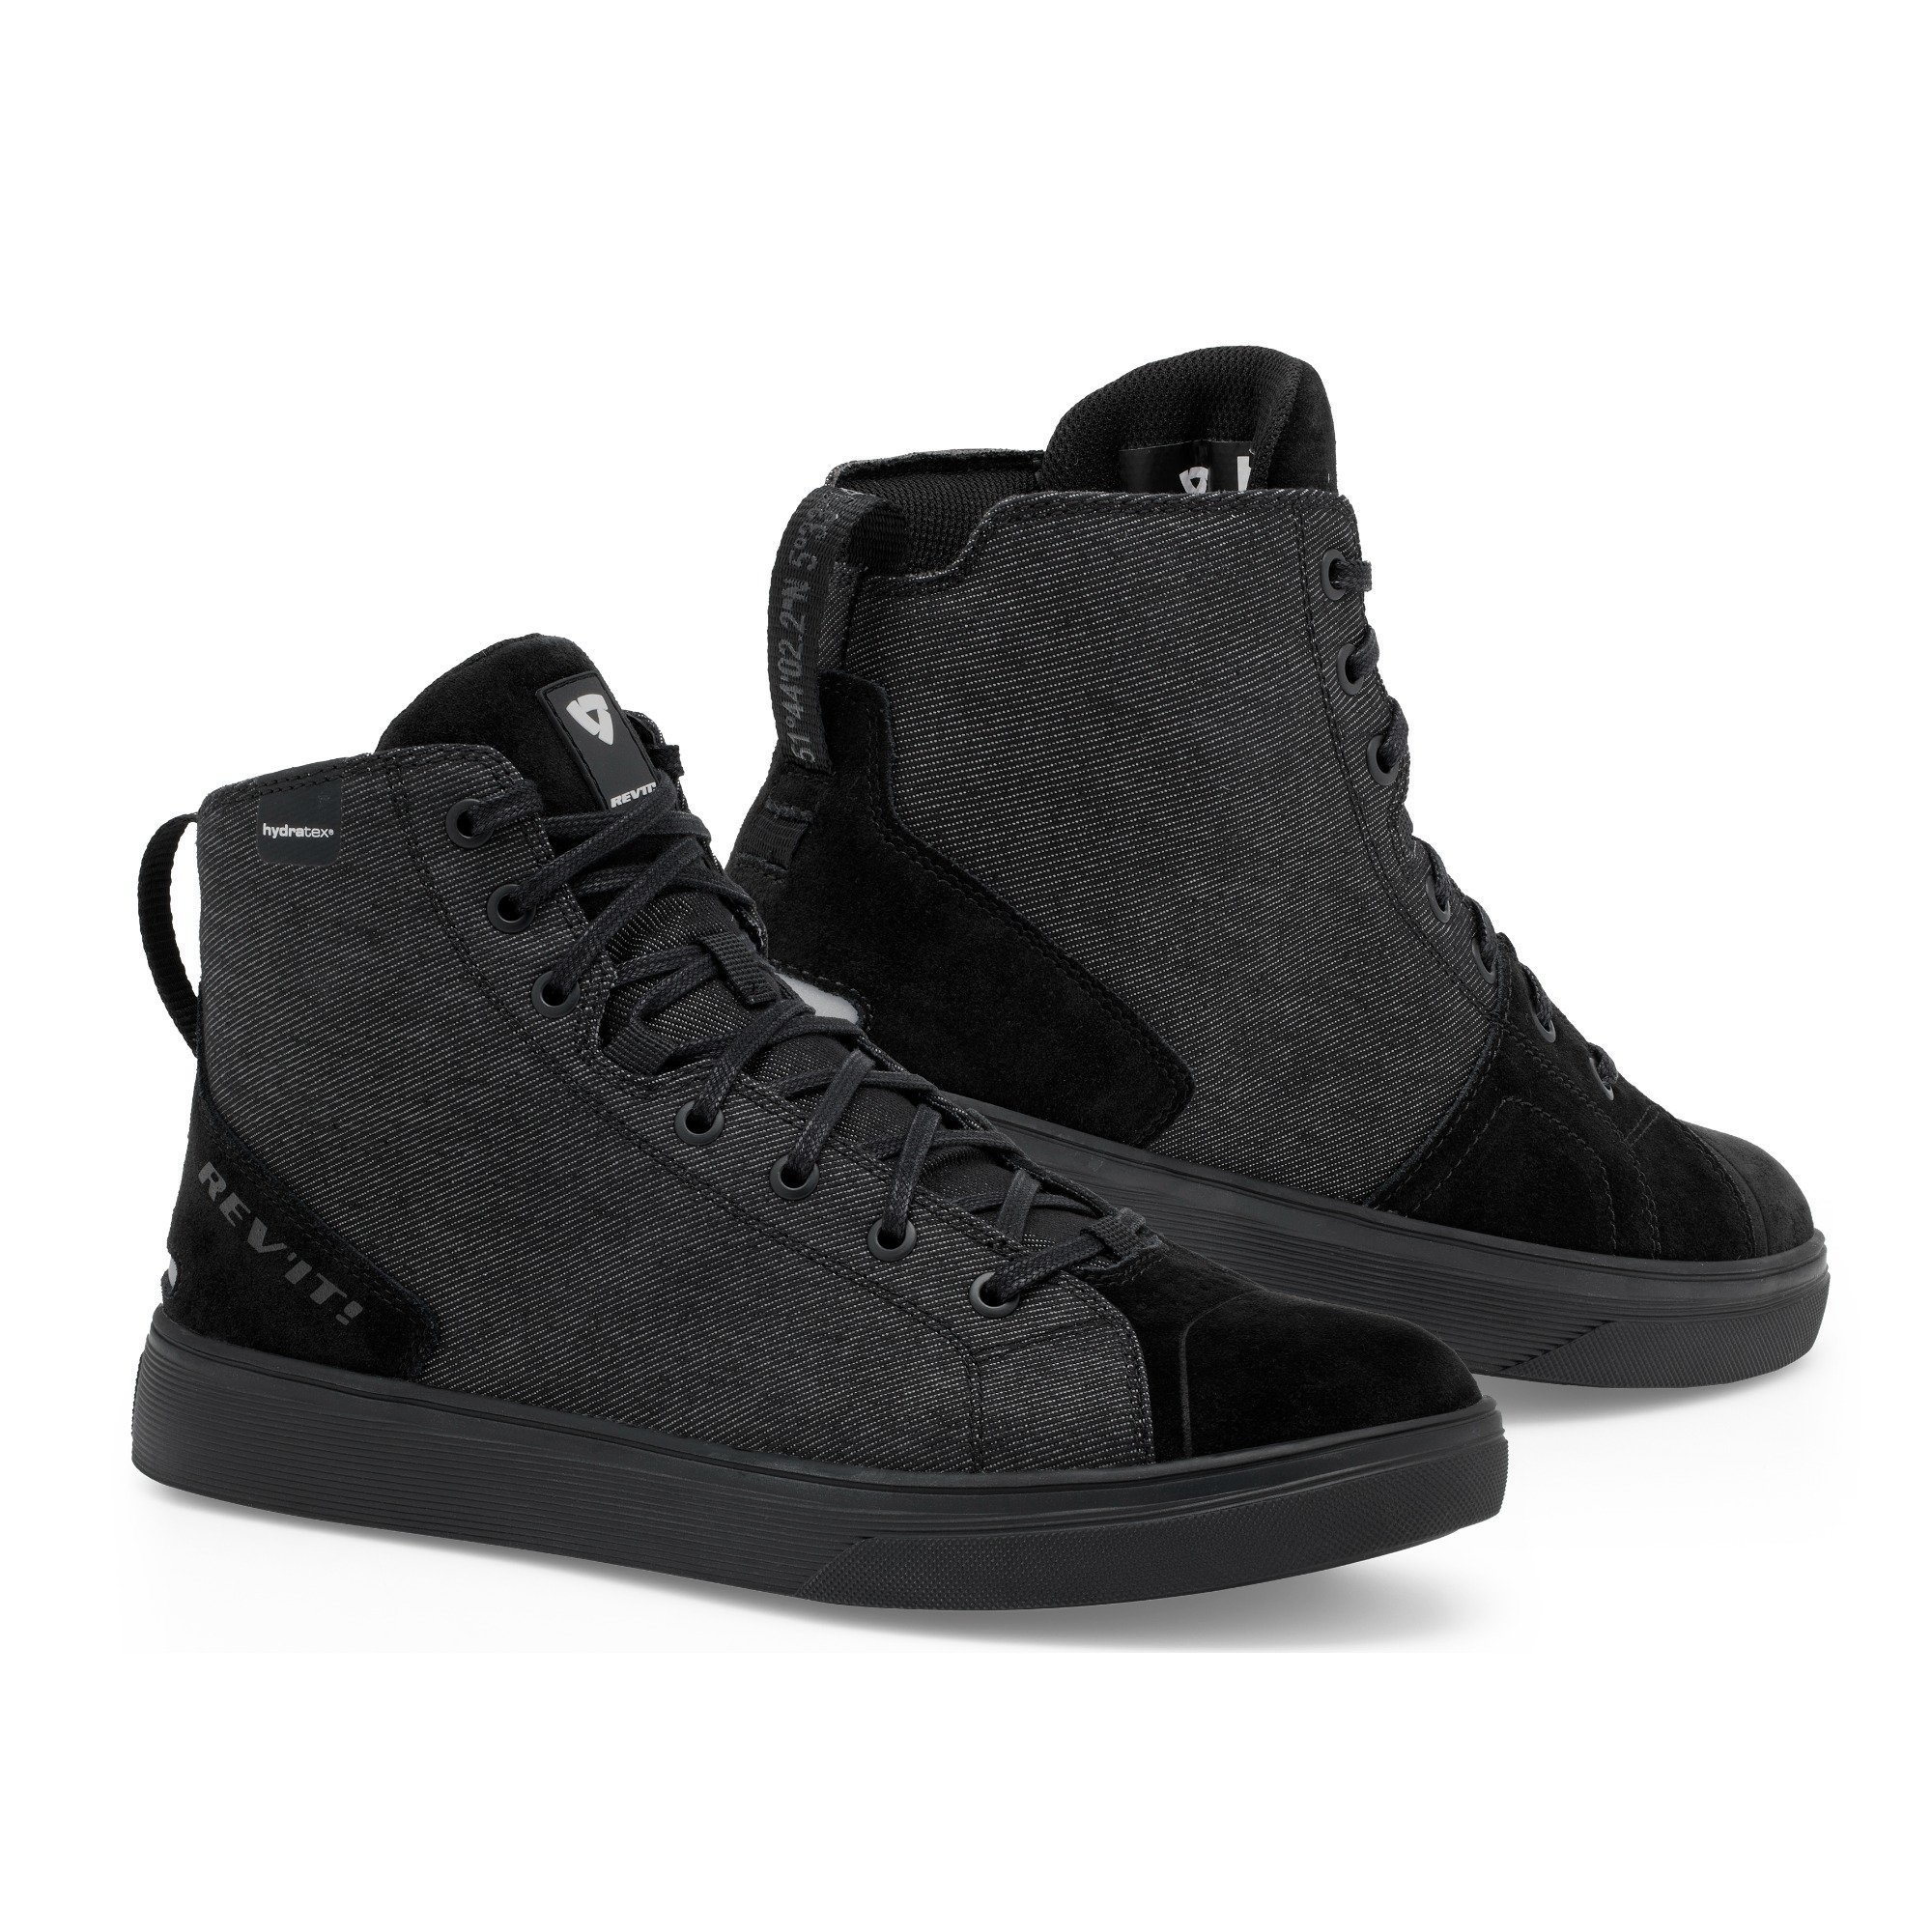 Image of REV'IT! Delta H2O Shoes Black Size 47 EN